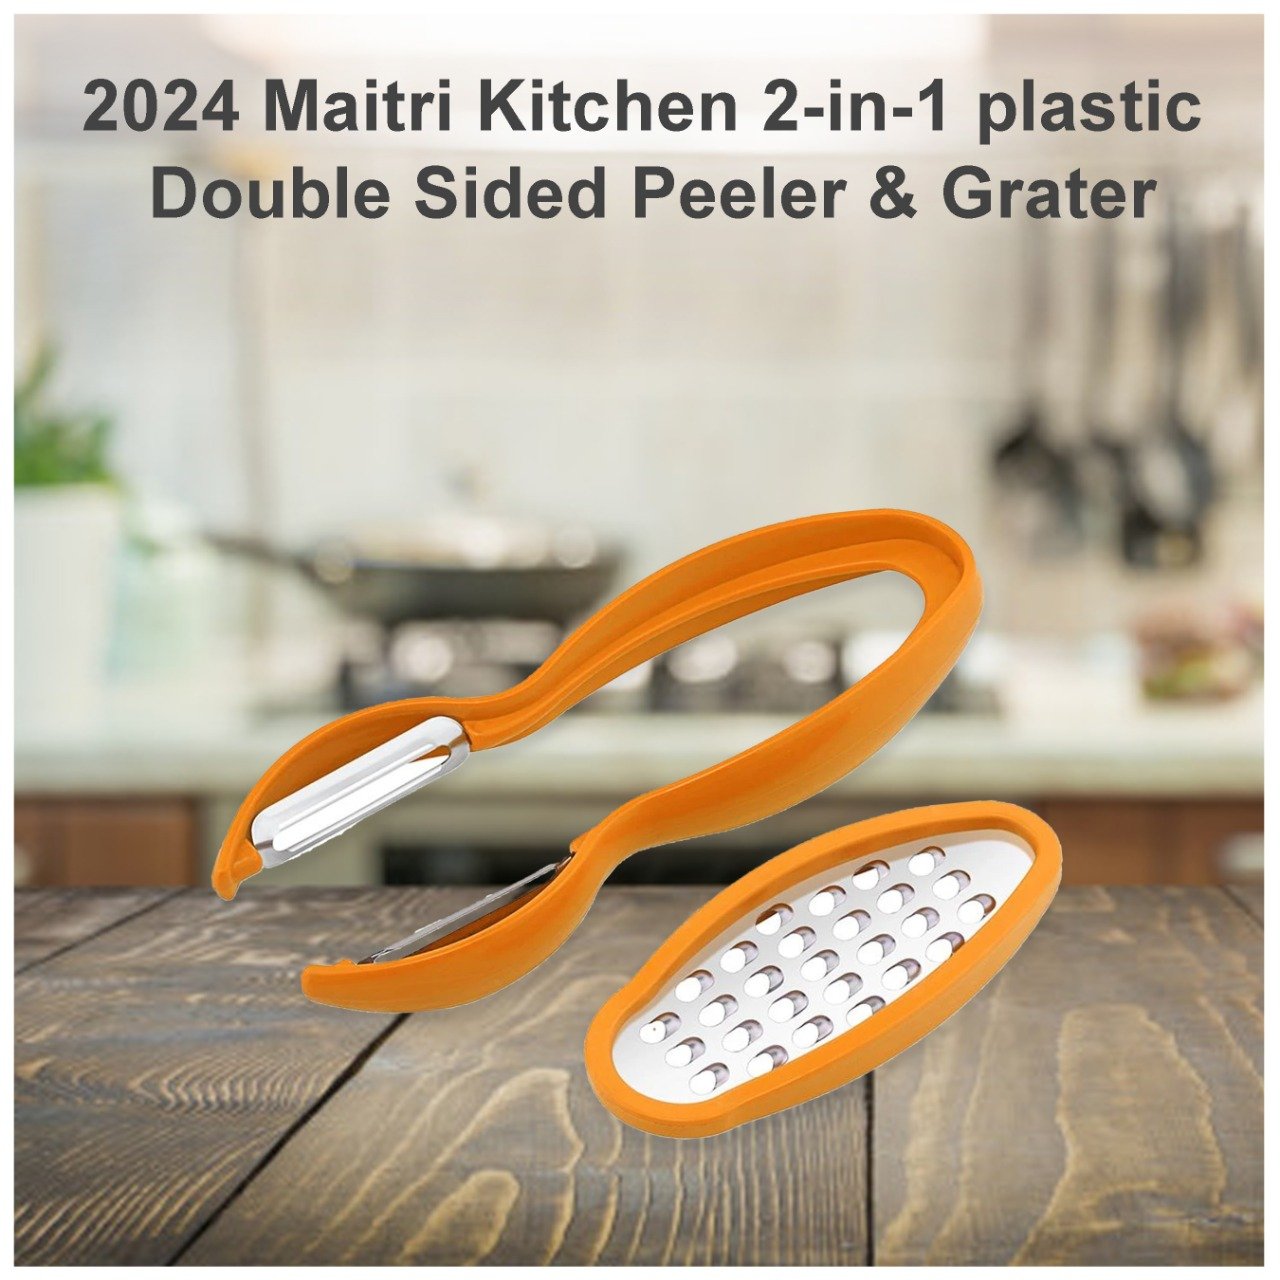 2024_maitri dual side plastic kitchen peeler